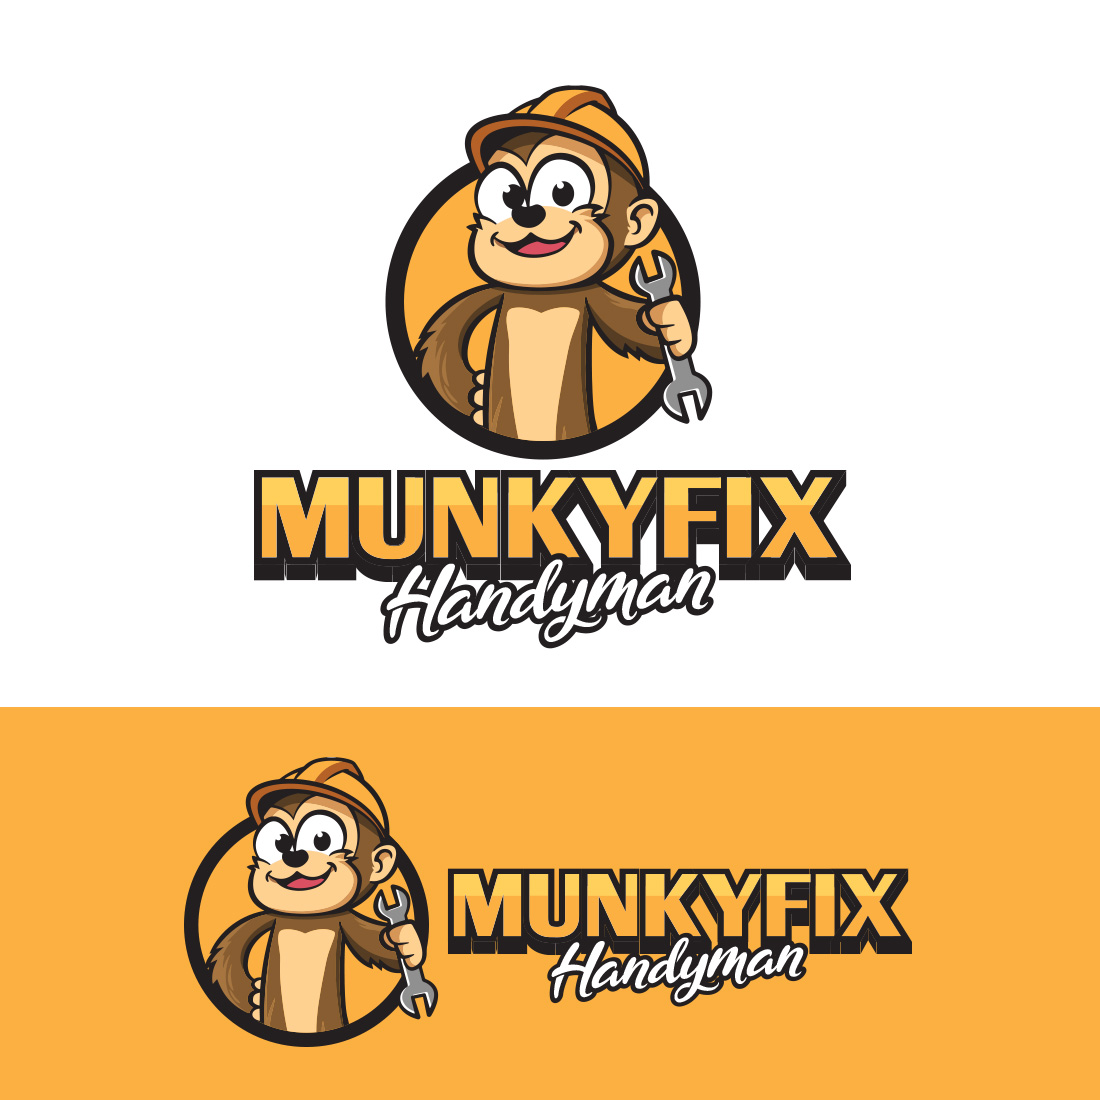 Monkey Handyman Logo cover image.